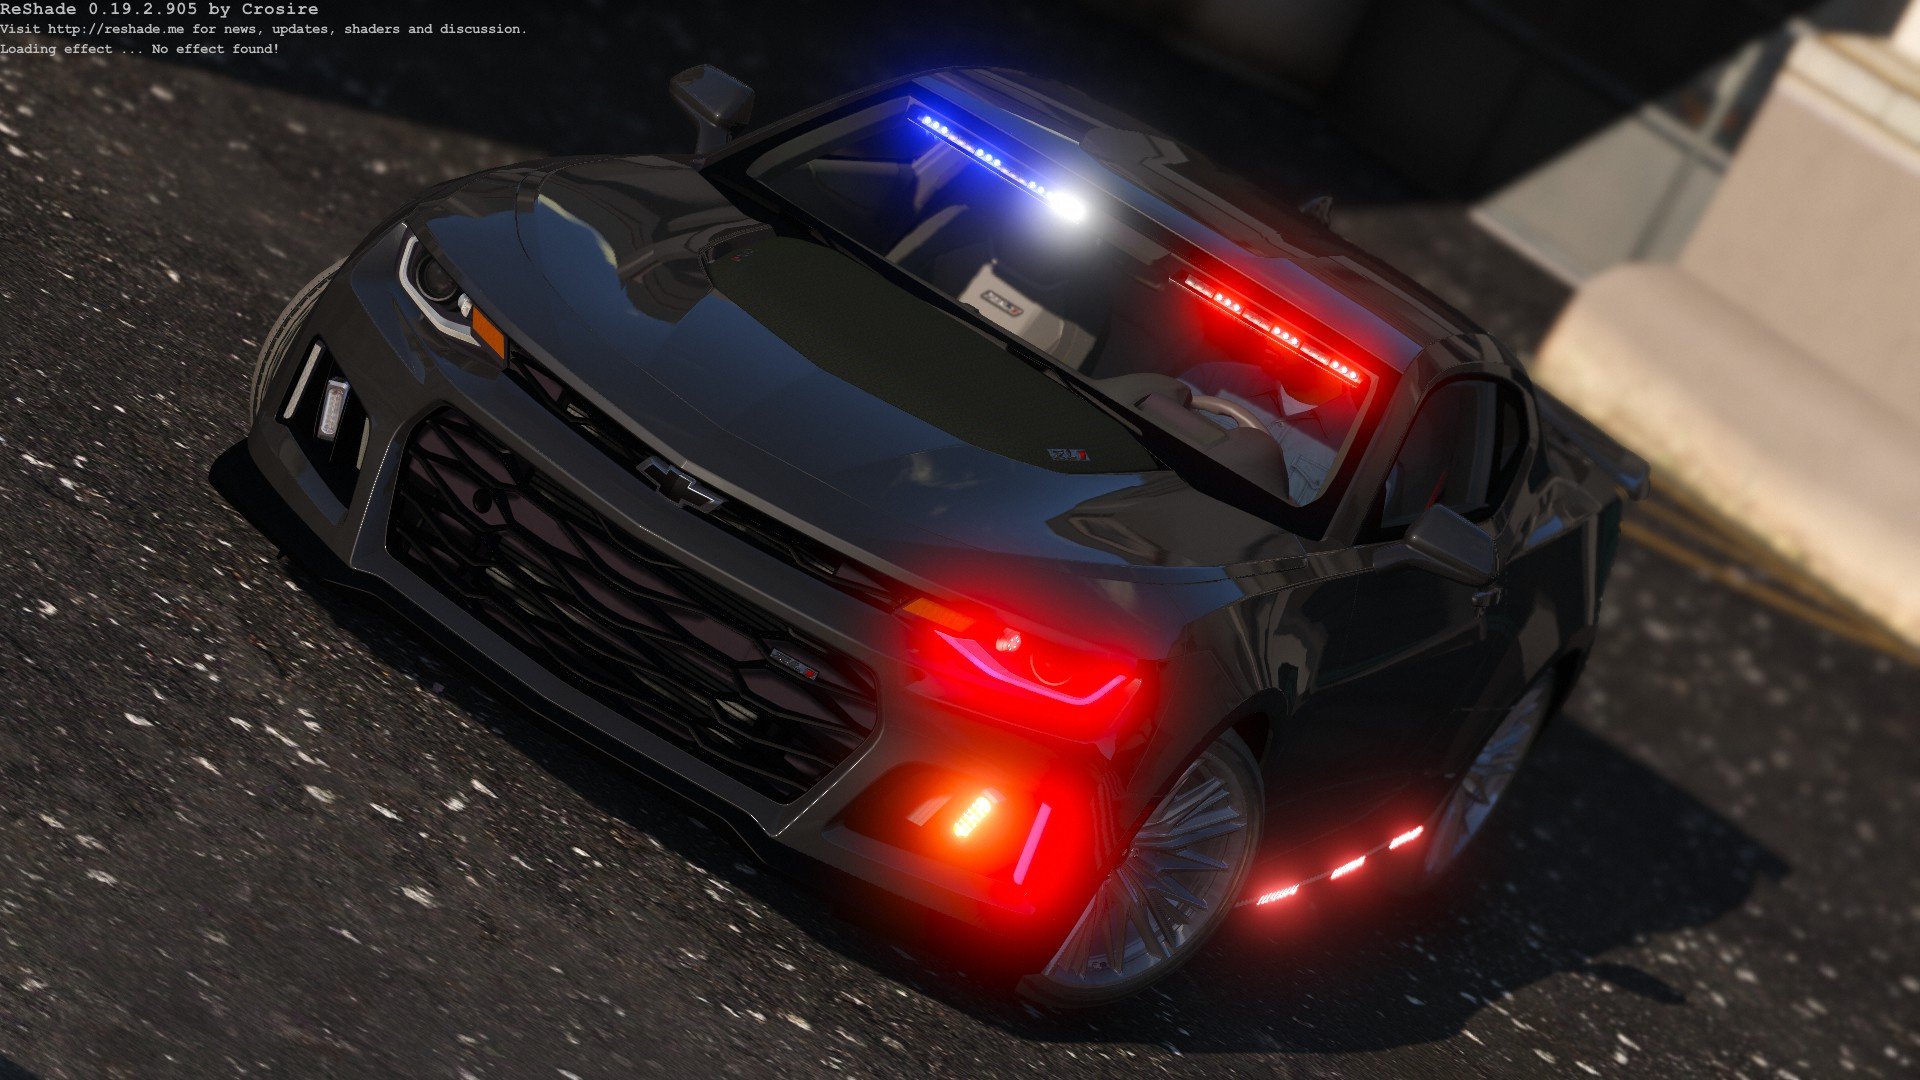 Camaro Police Car Fivem